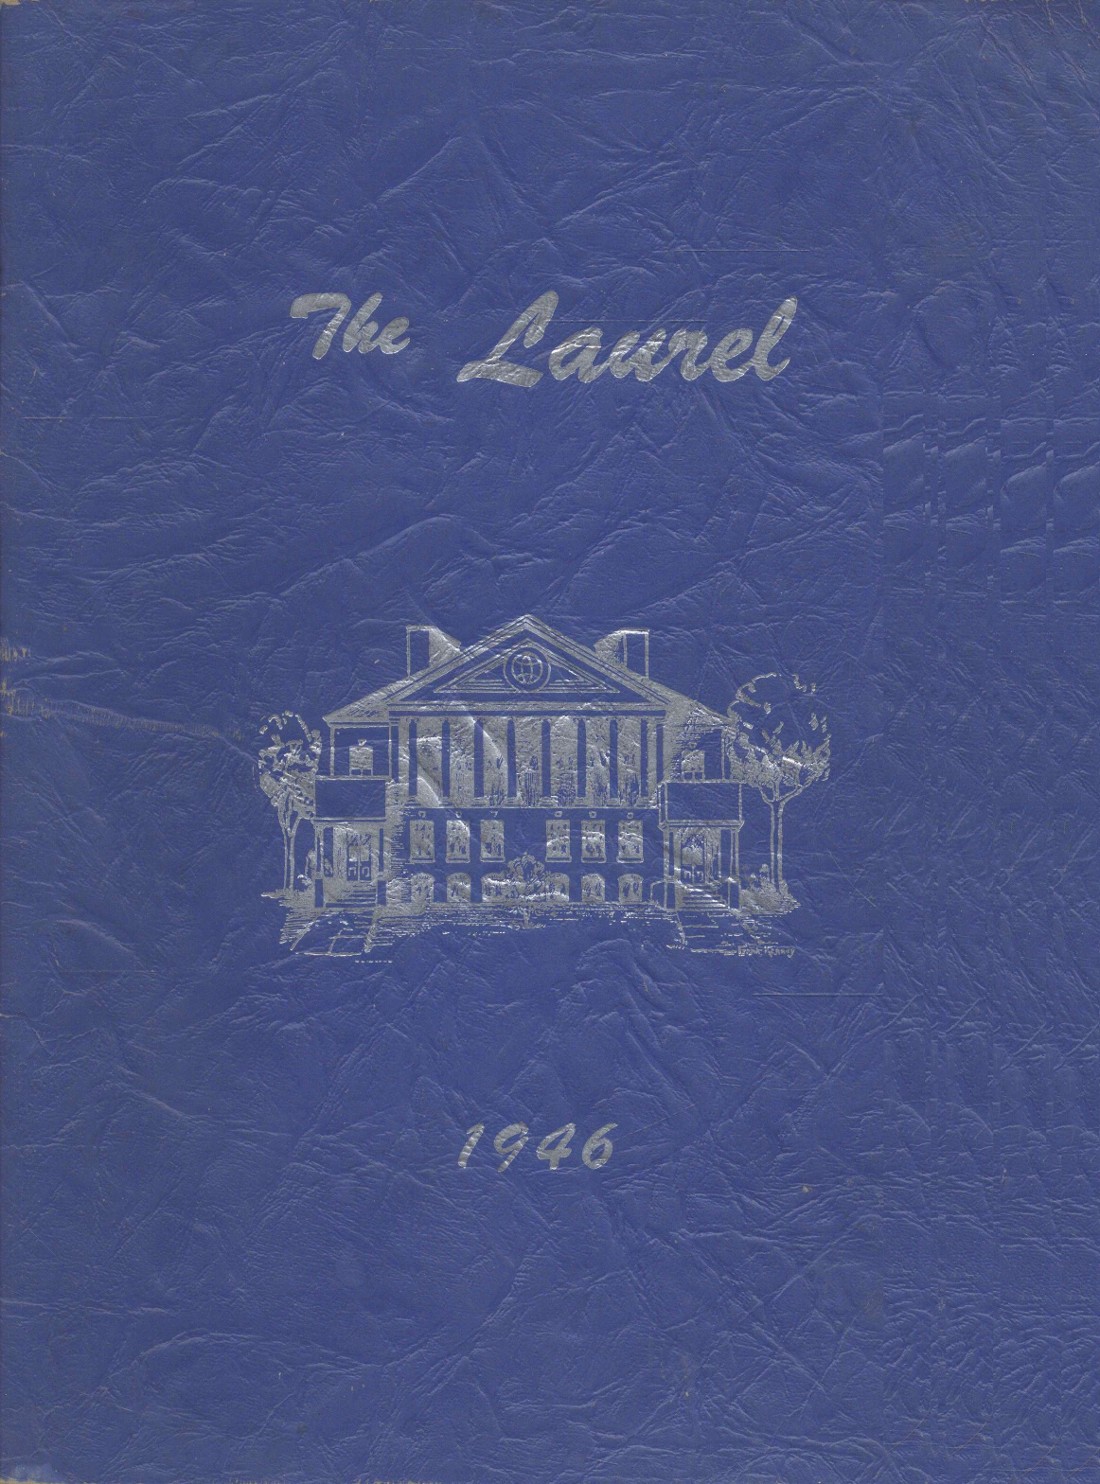 1946 yearbook from Farmington High School from Farmington, Maine for sale